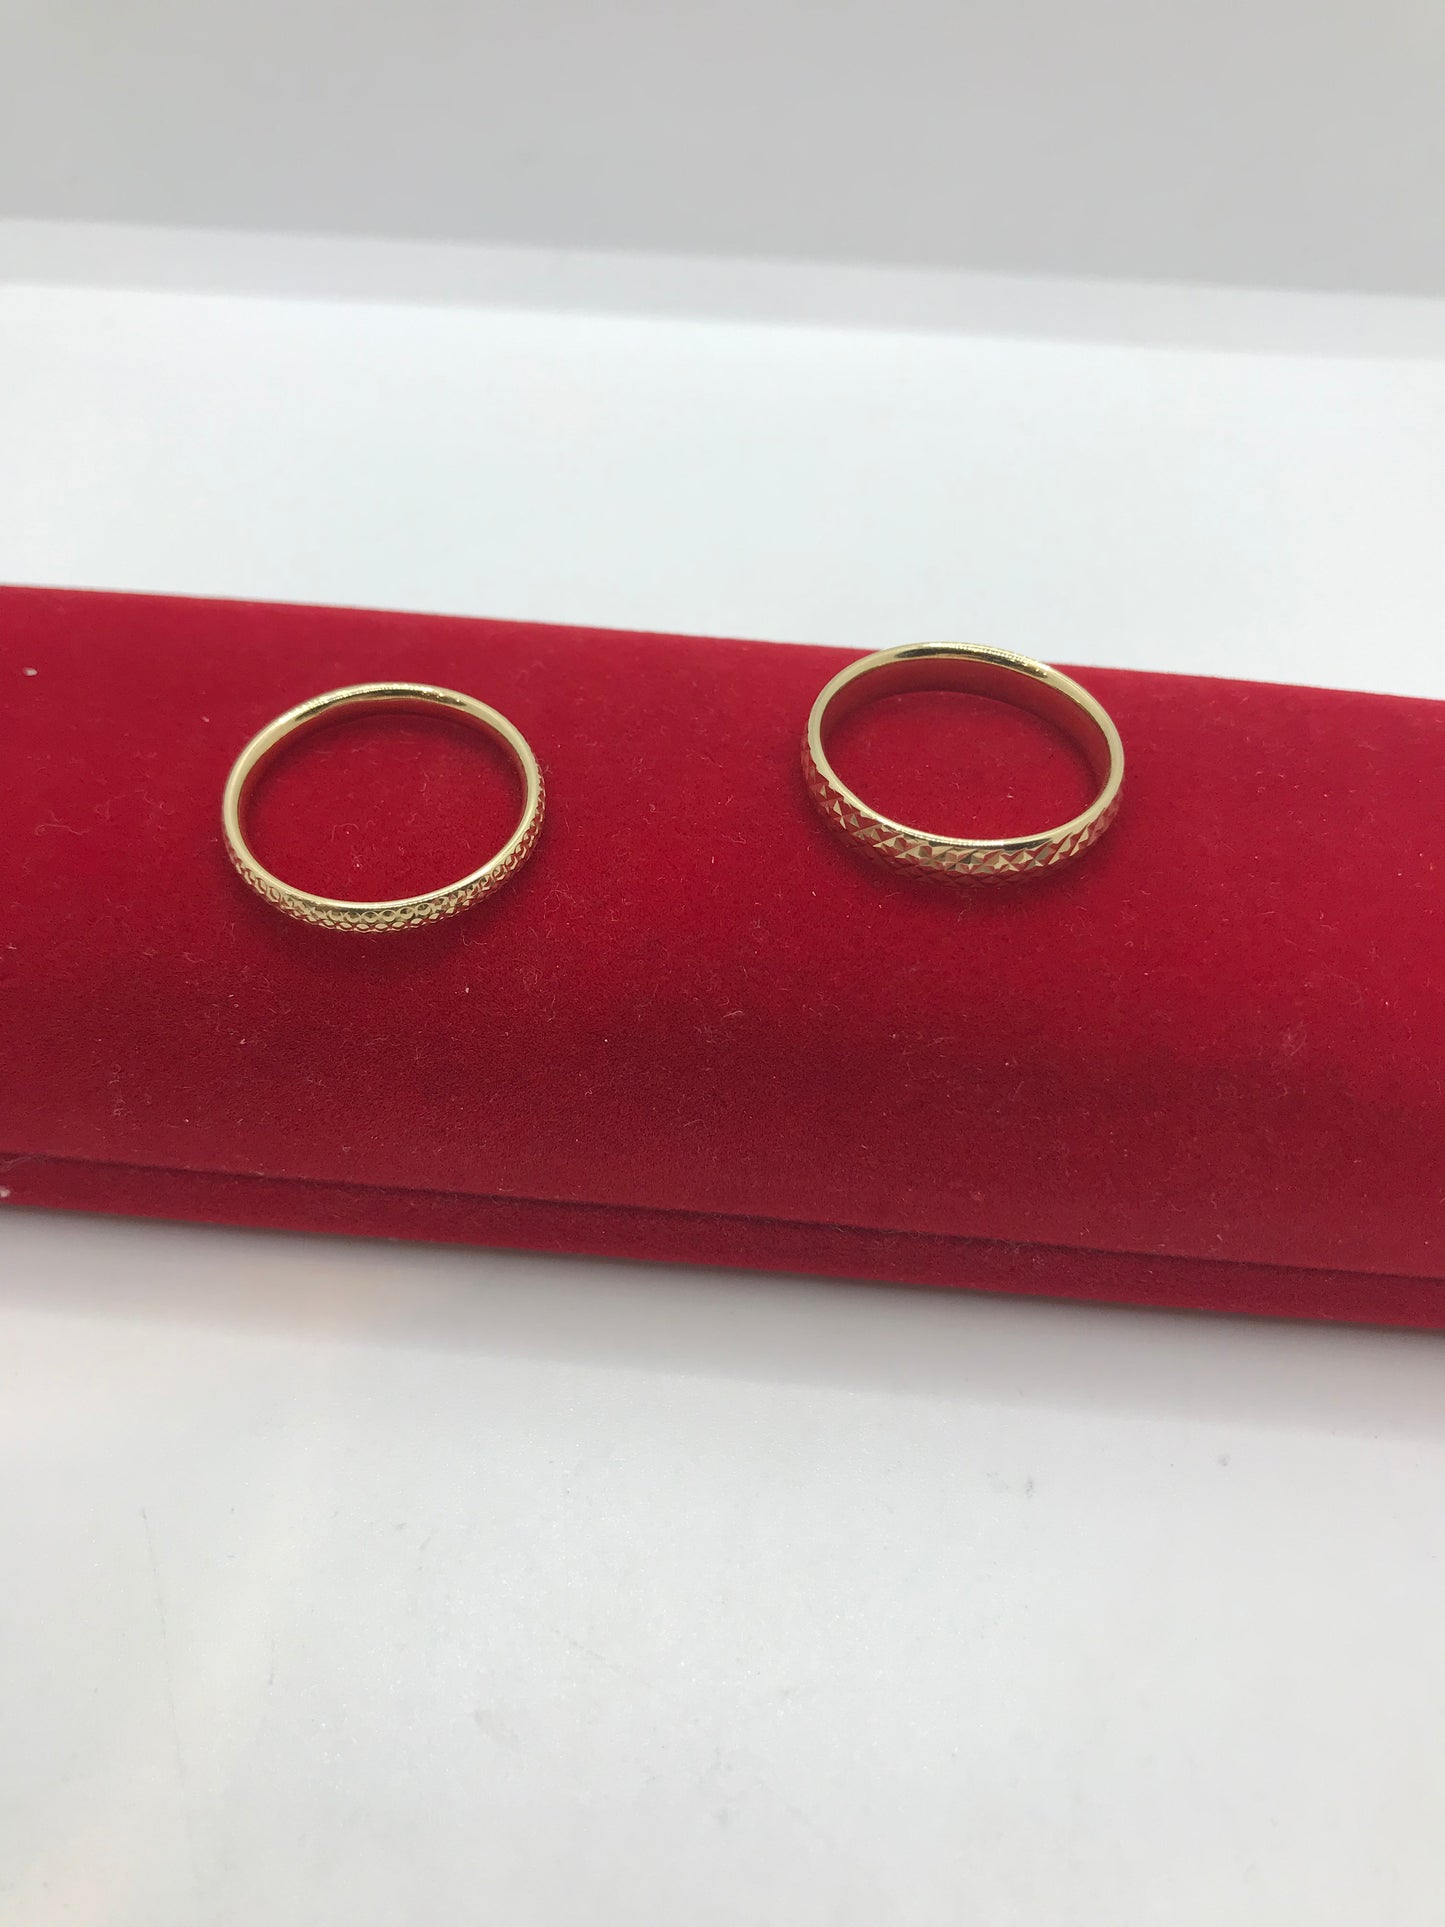 10k gold CZ Stone rings